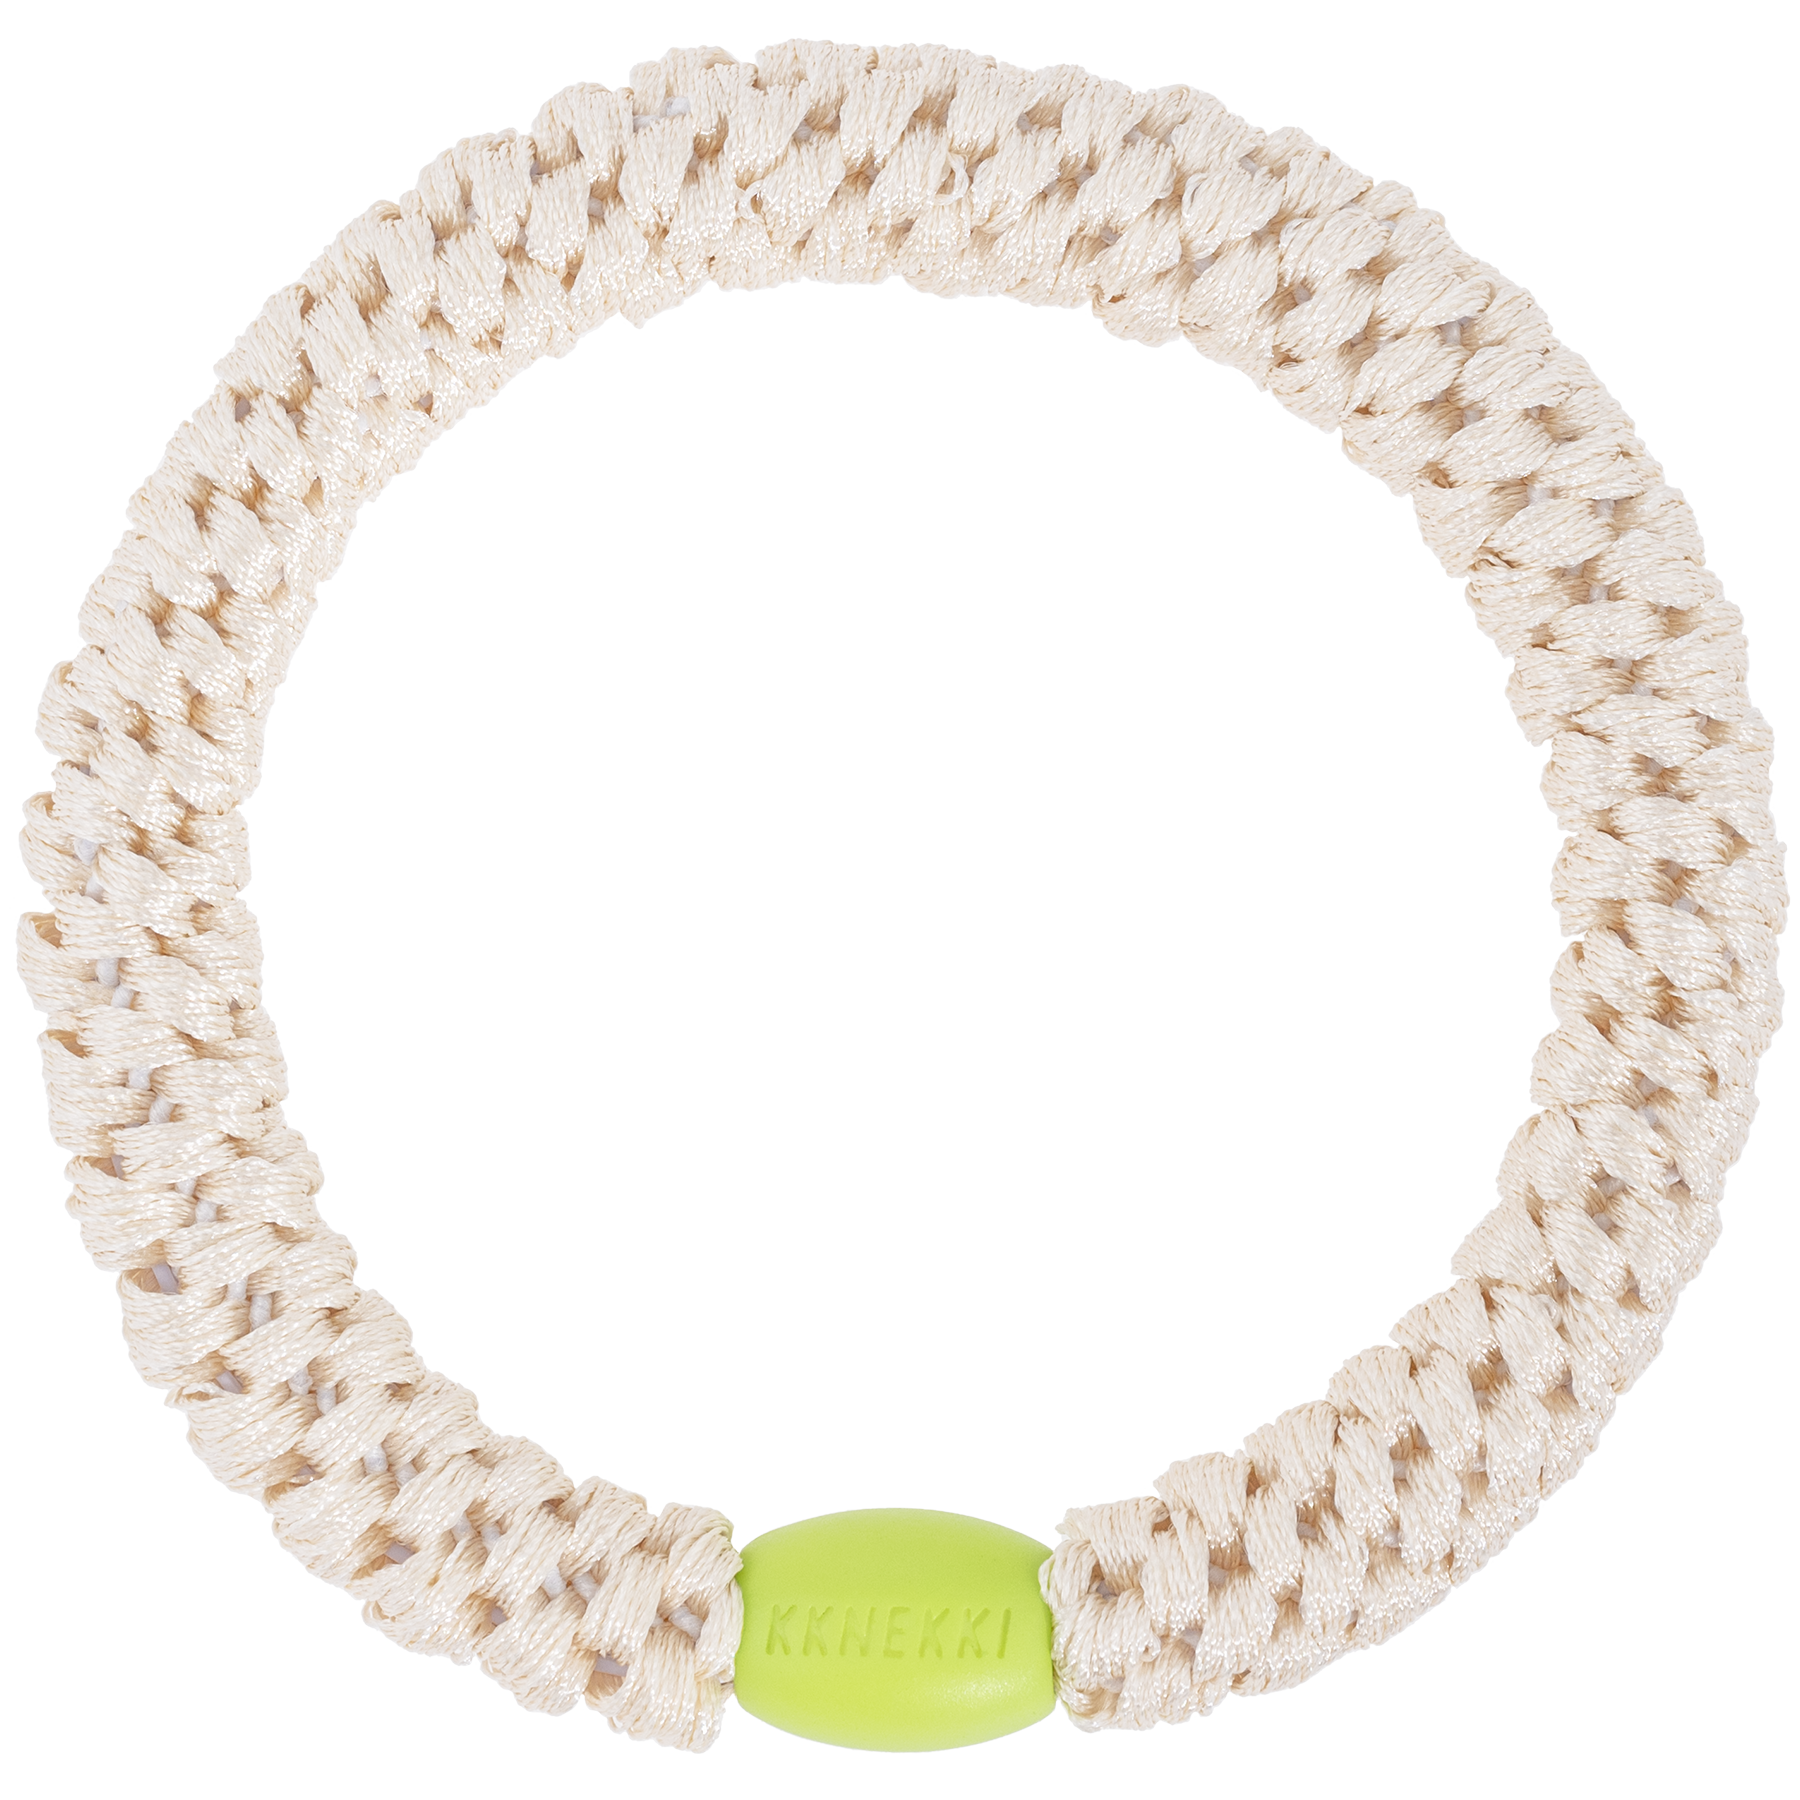 Image of Kknekki Ivory green bead  from Kknekki original hair ties